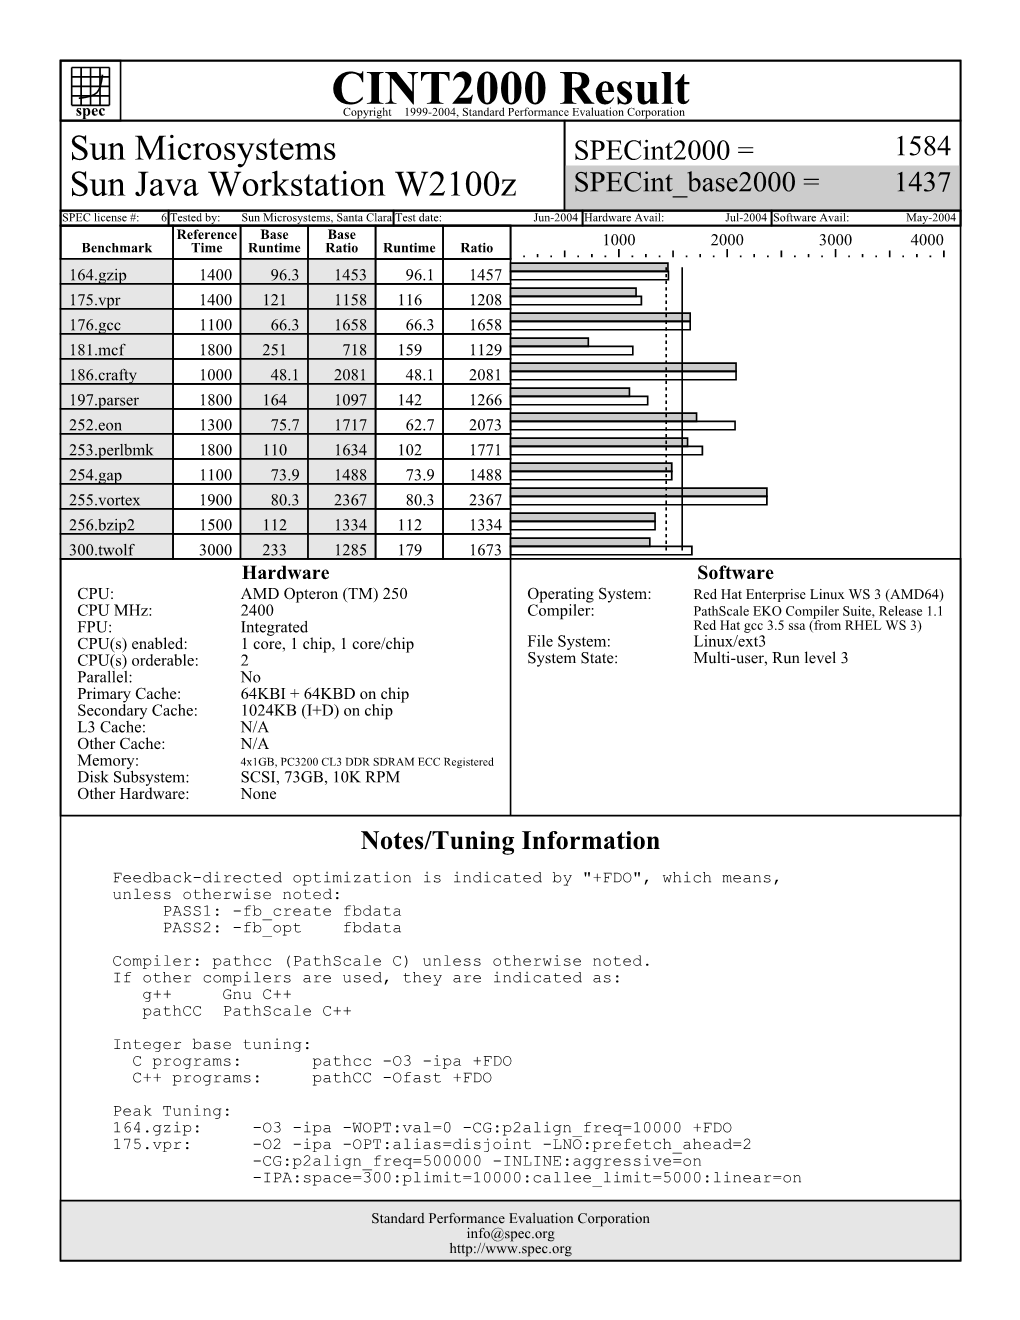 Sun Microsystems: Sun Java Workstation W2100z